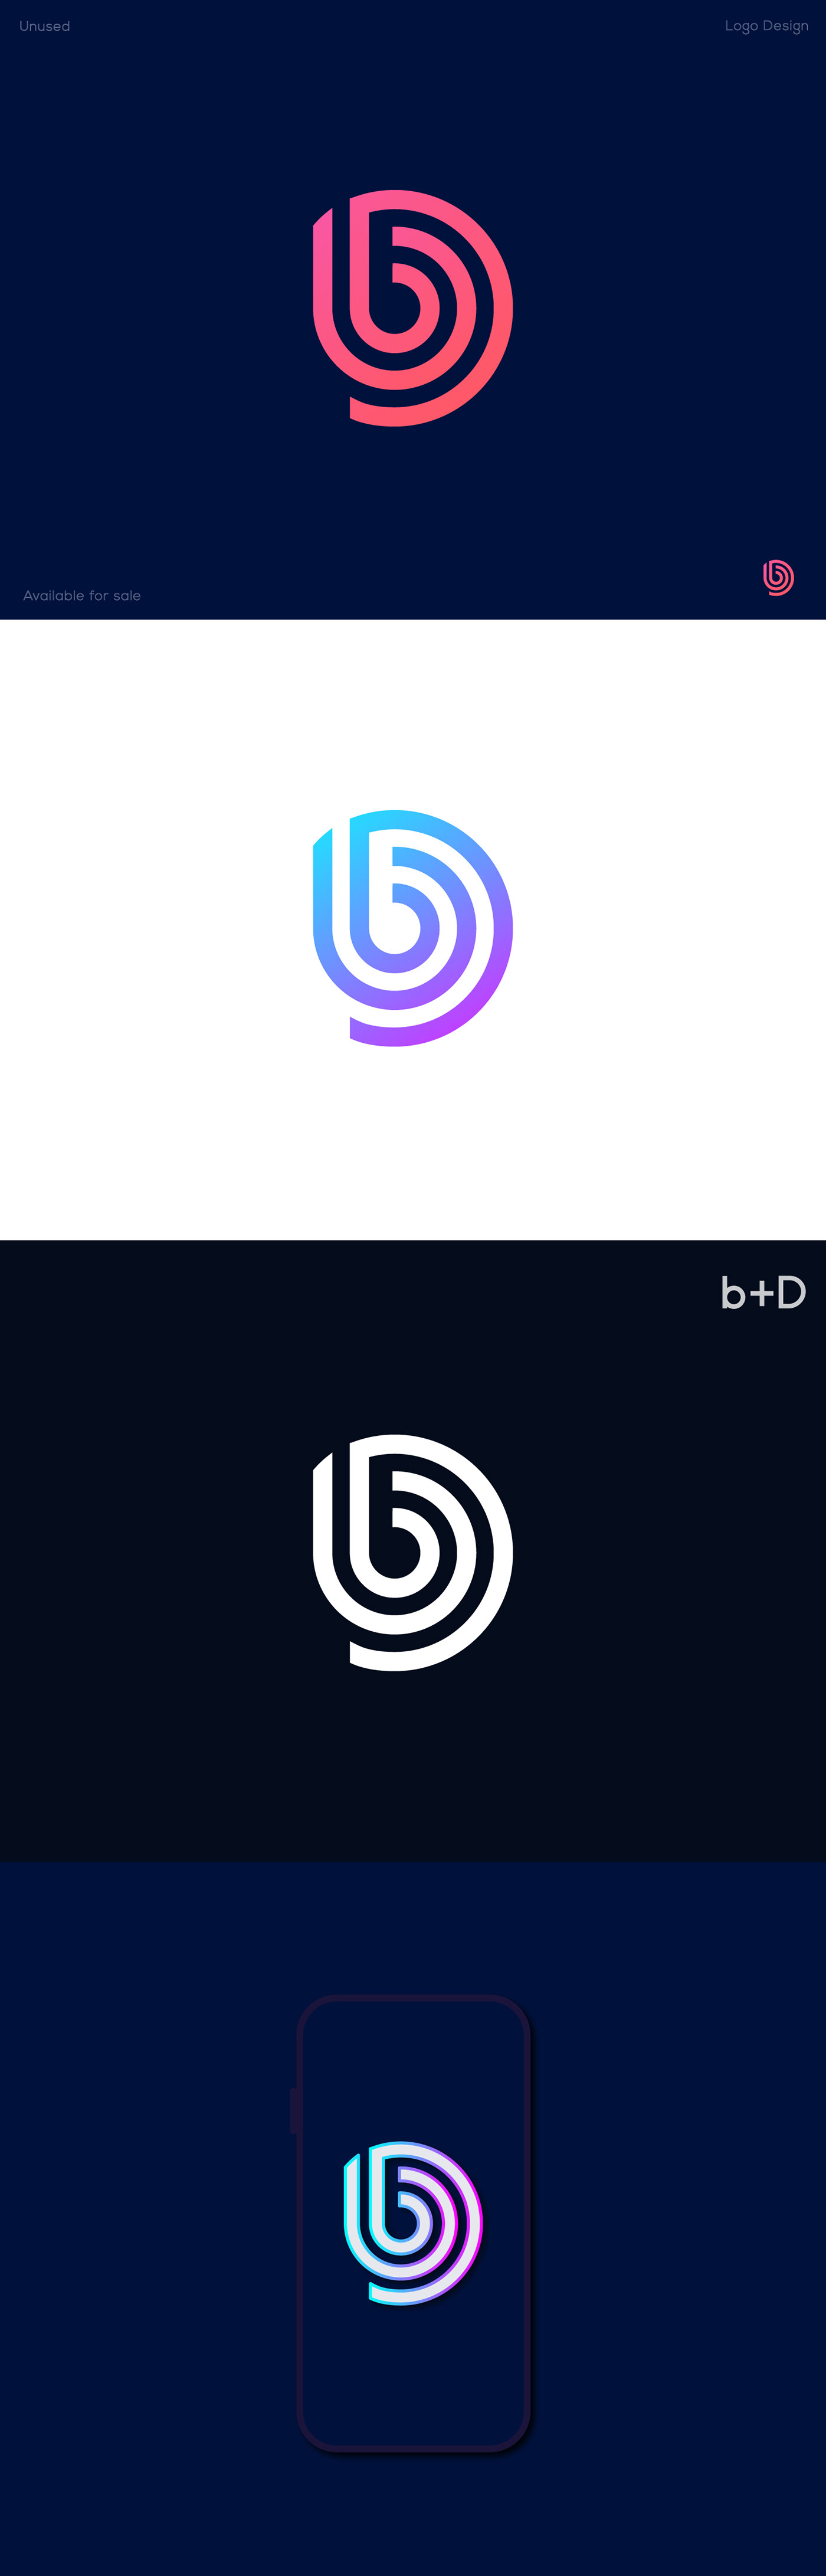 App logo b+D logo desgin behance top designers brand identity design company logo creative logo letter logo logo concept logo tent 20221 Modern Logo